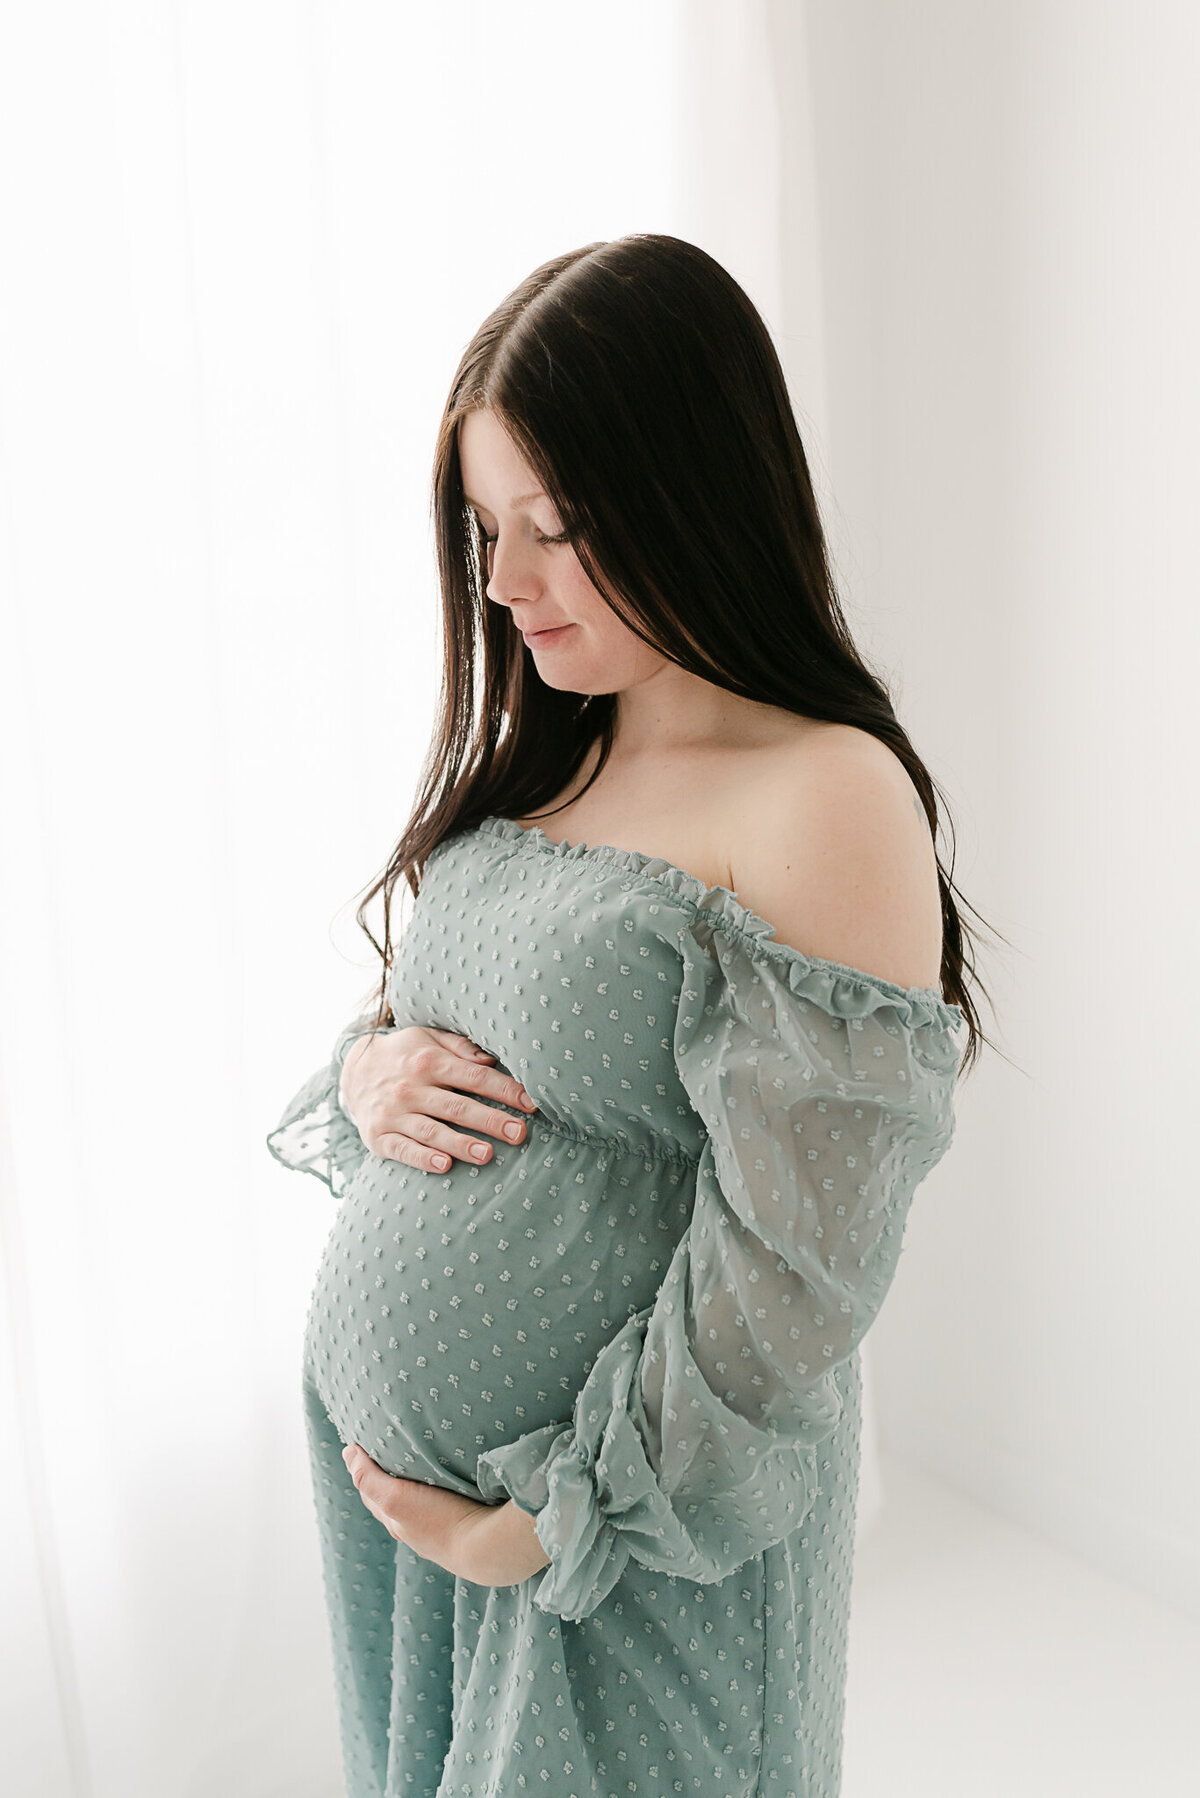 edmonton-maternity-photographer-41-2